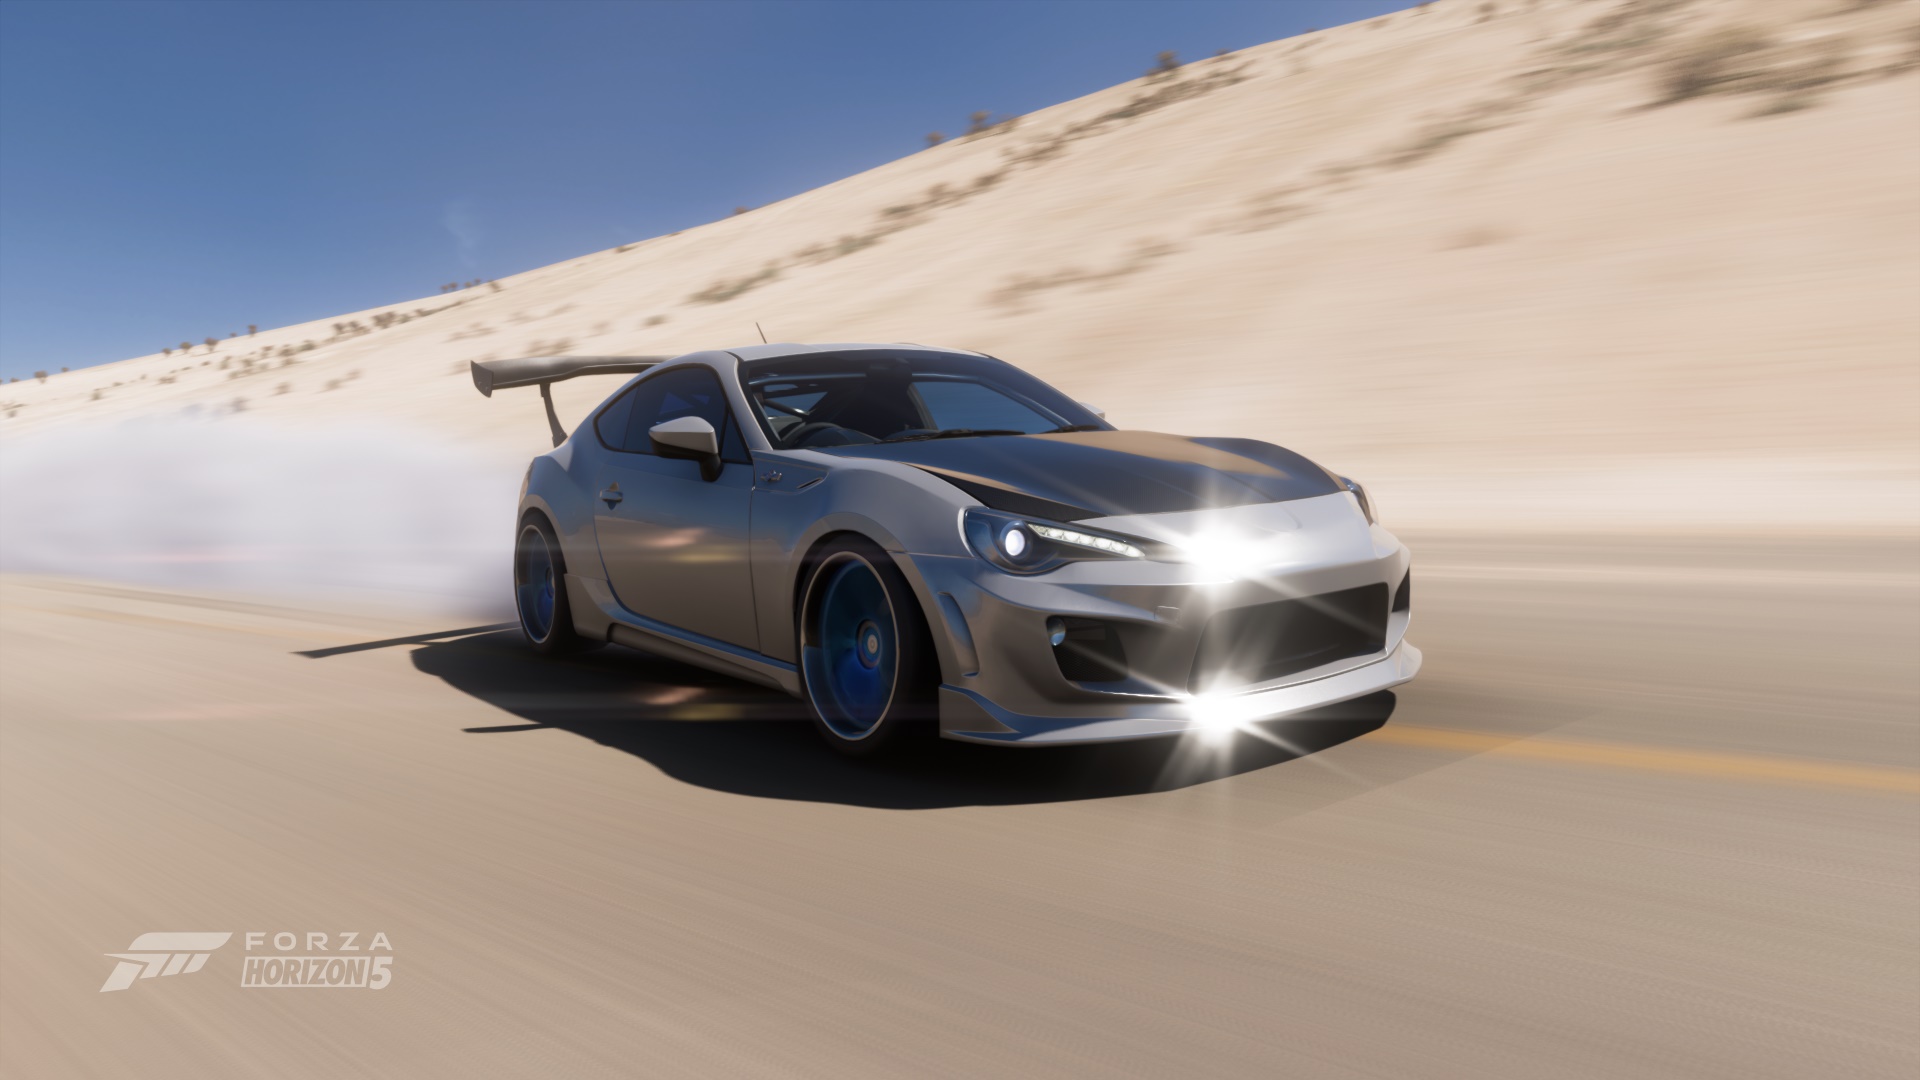 General 1920x1080 Forza Forza Horizon 5 video games drift drift cars Toyota motion blur desert dunes custom-made tuning car spoiler car